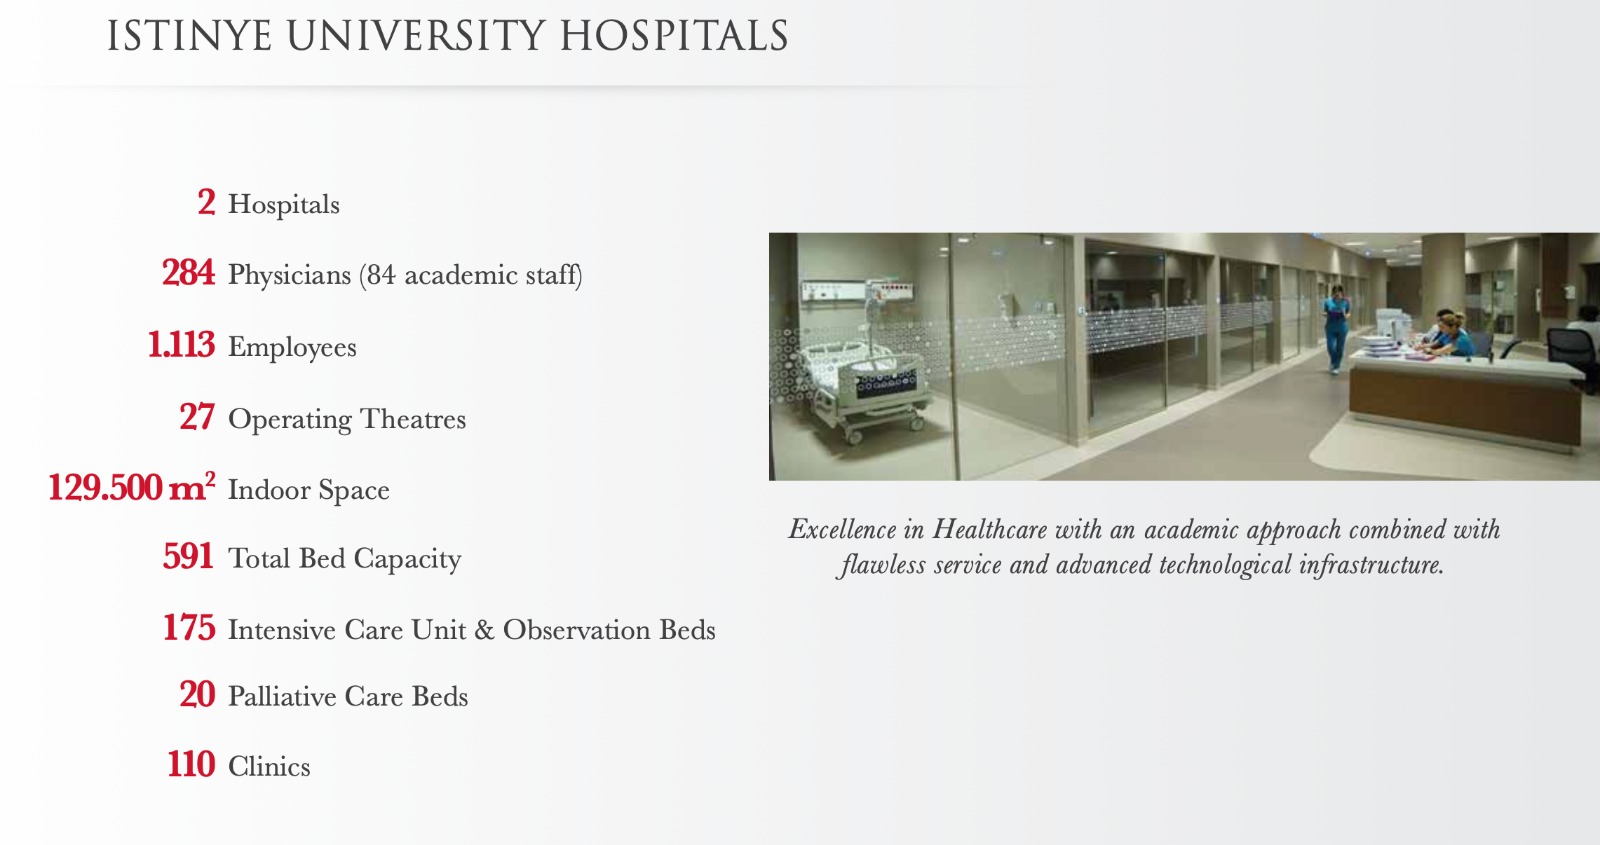 Istinye University Hospitals